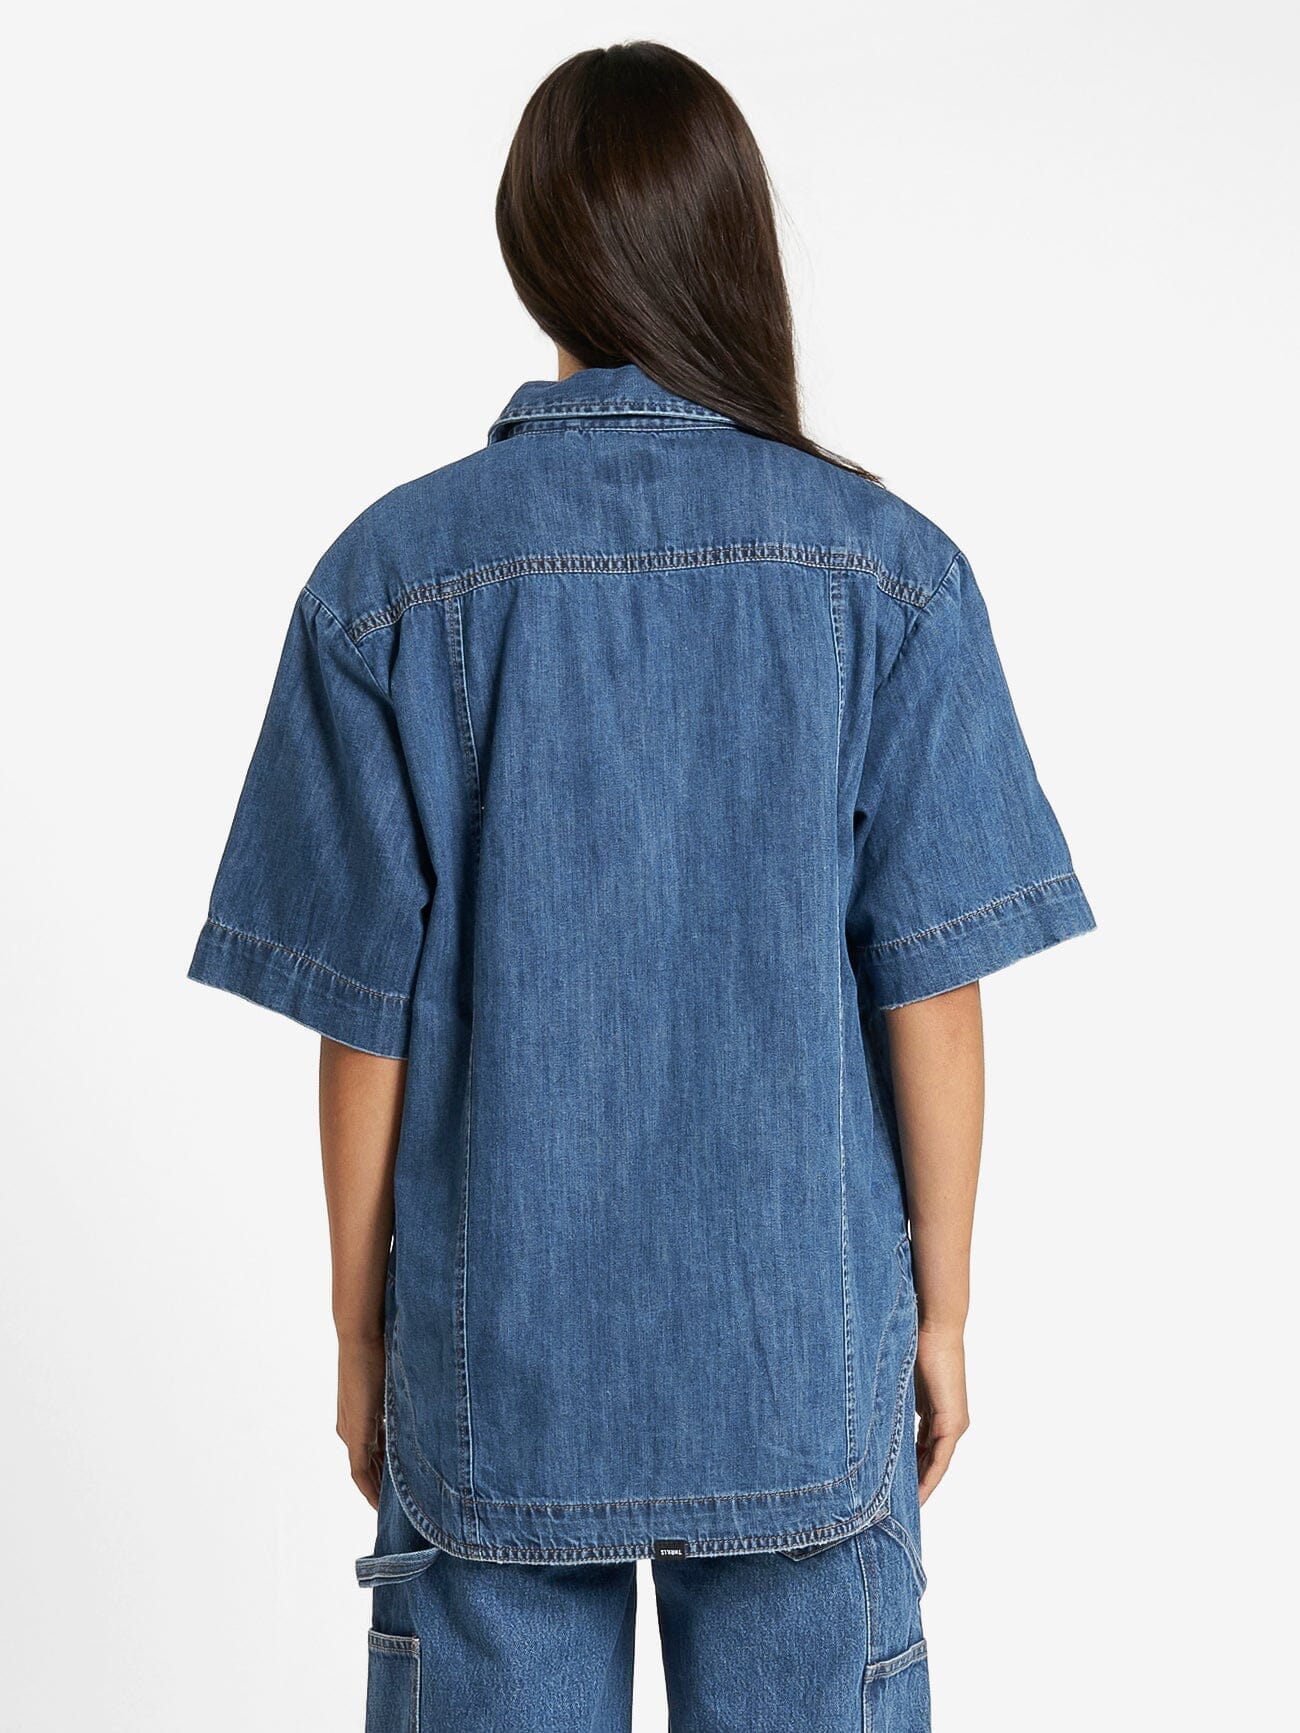 Louise Denim Shirt - Rinsed Blue